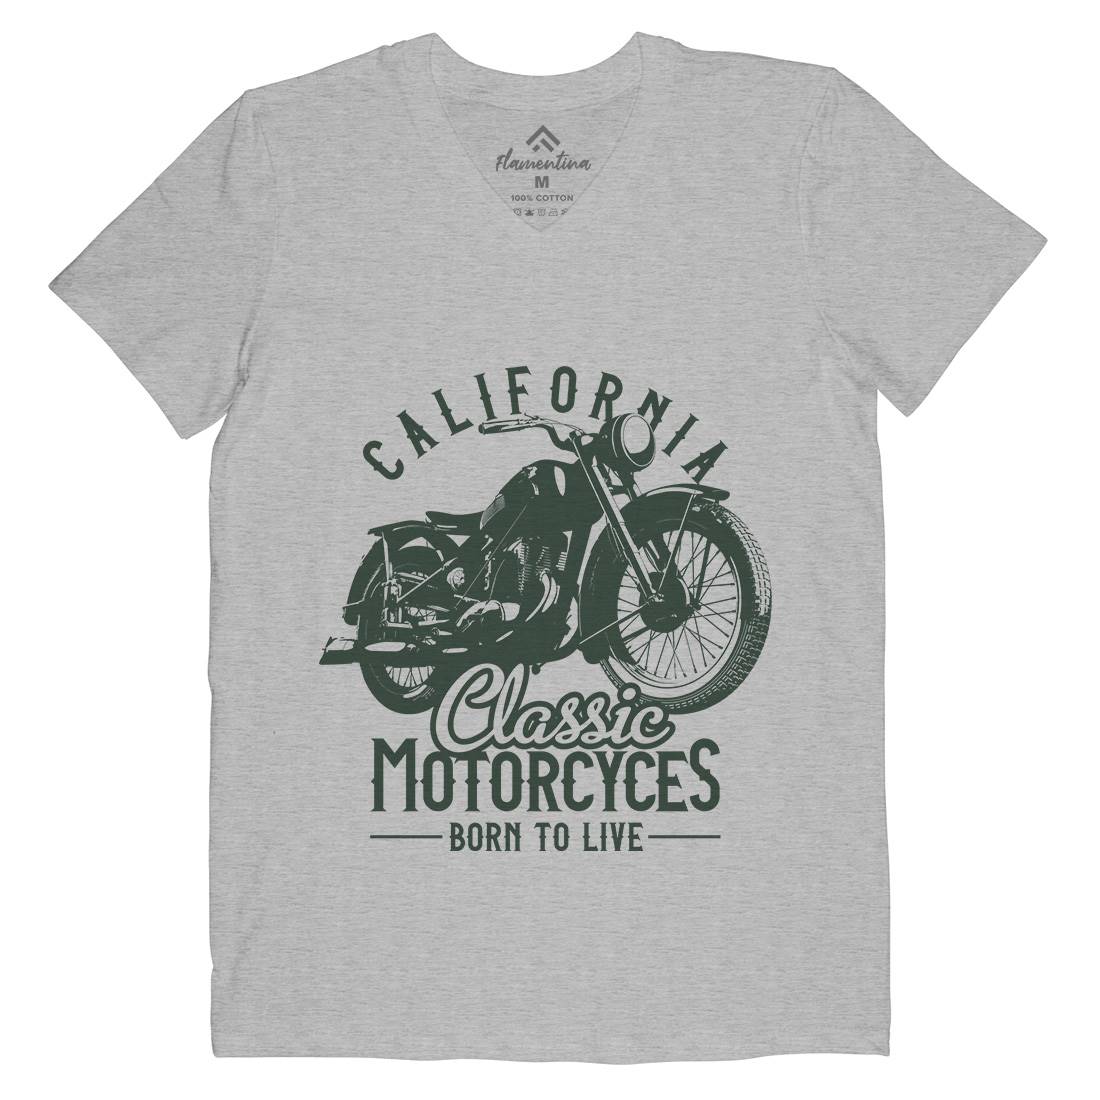 California Mens V-Neck T-Shirt Motorcycles B316